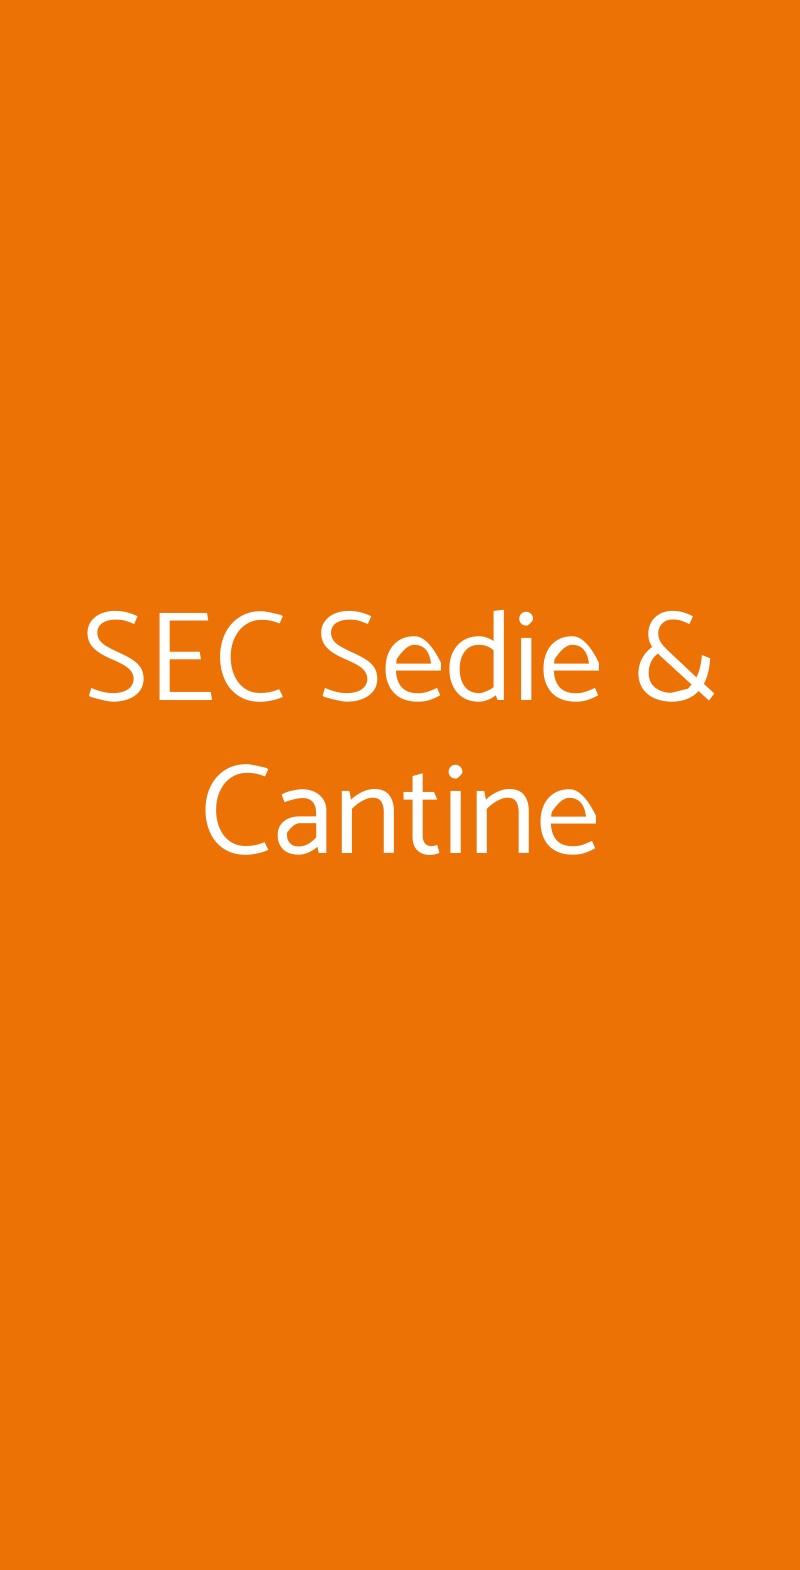 SEC Sedie & Cantine Roma menù 1 pagina